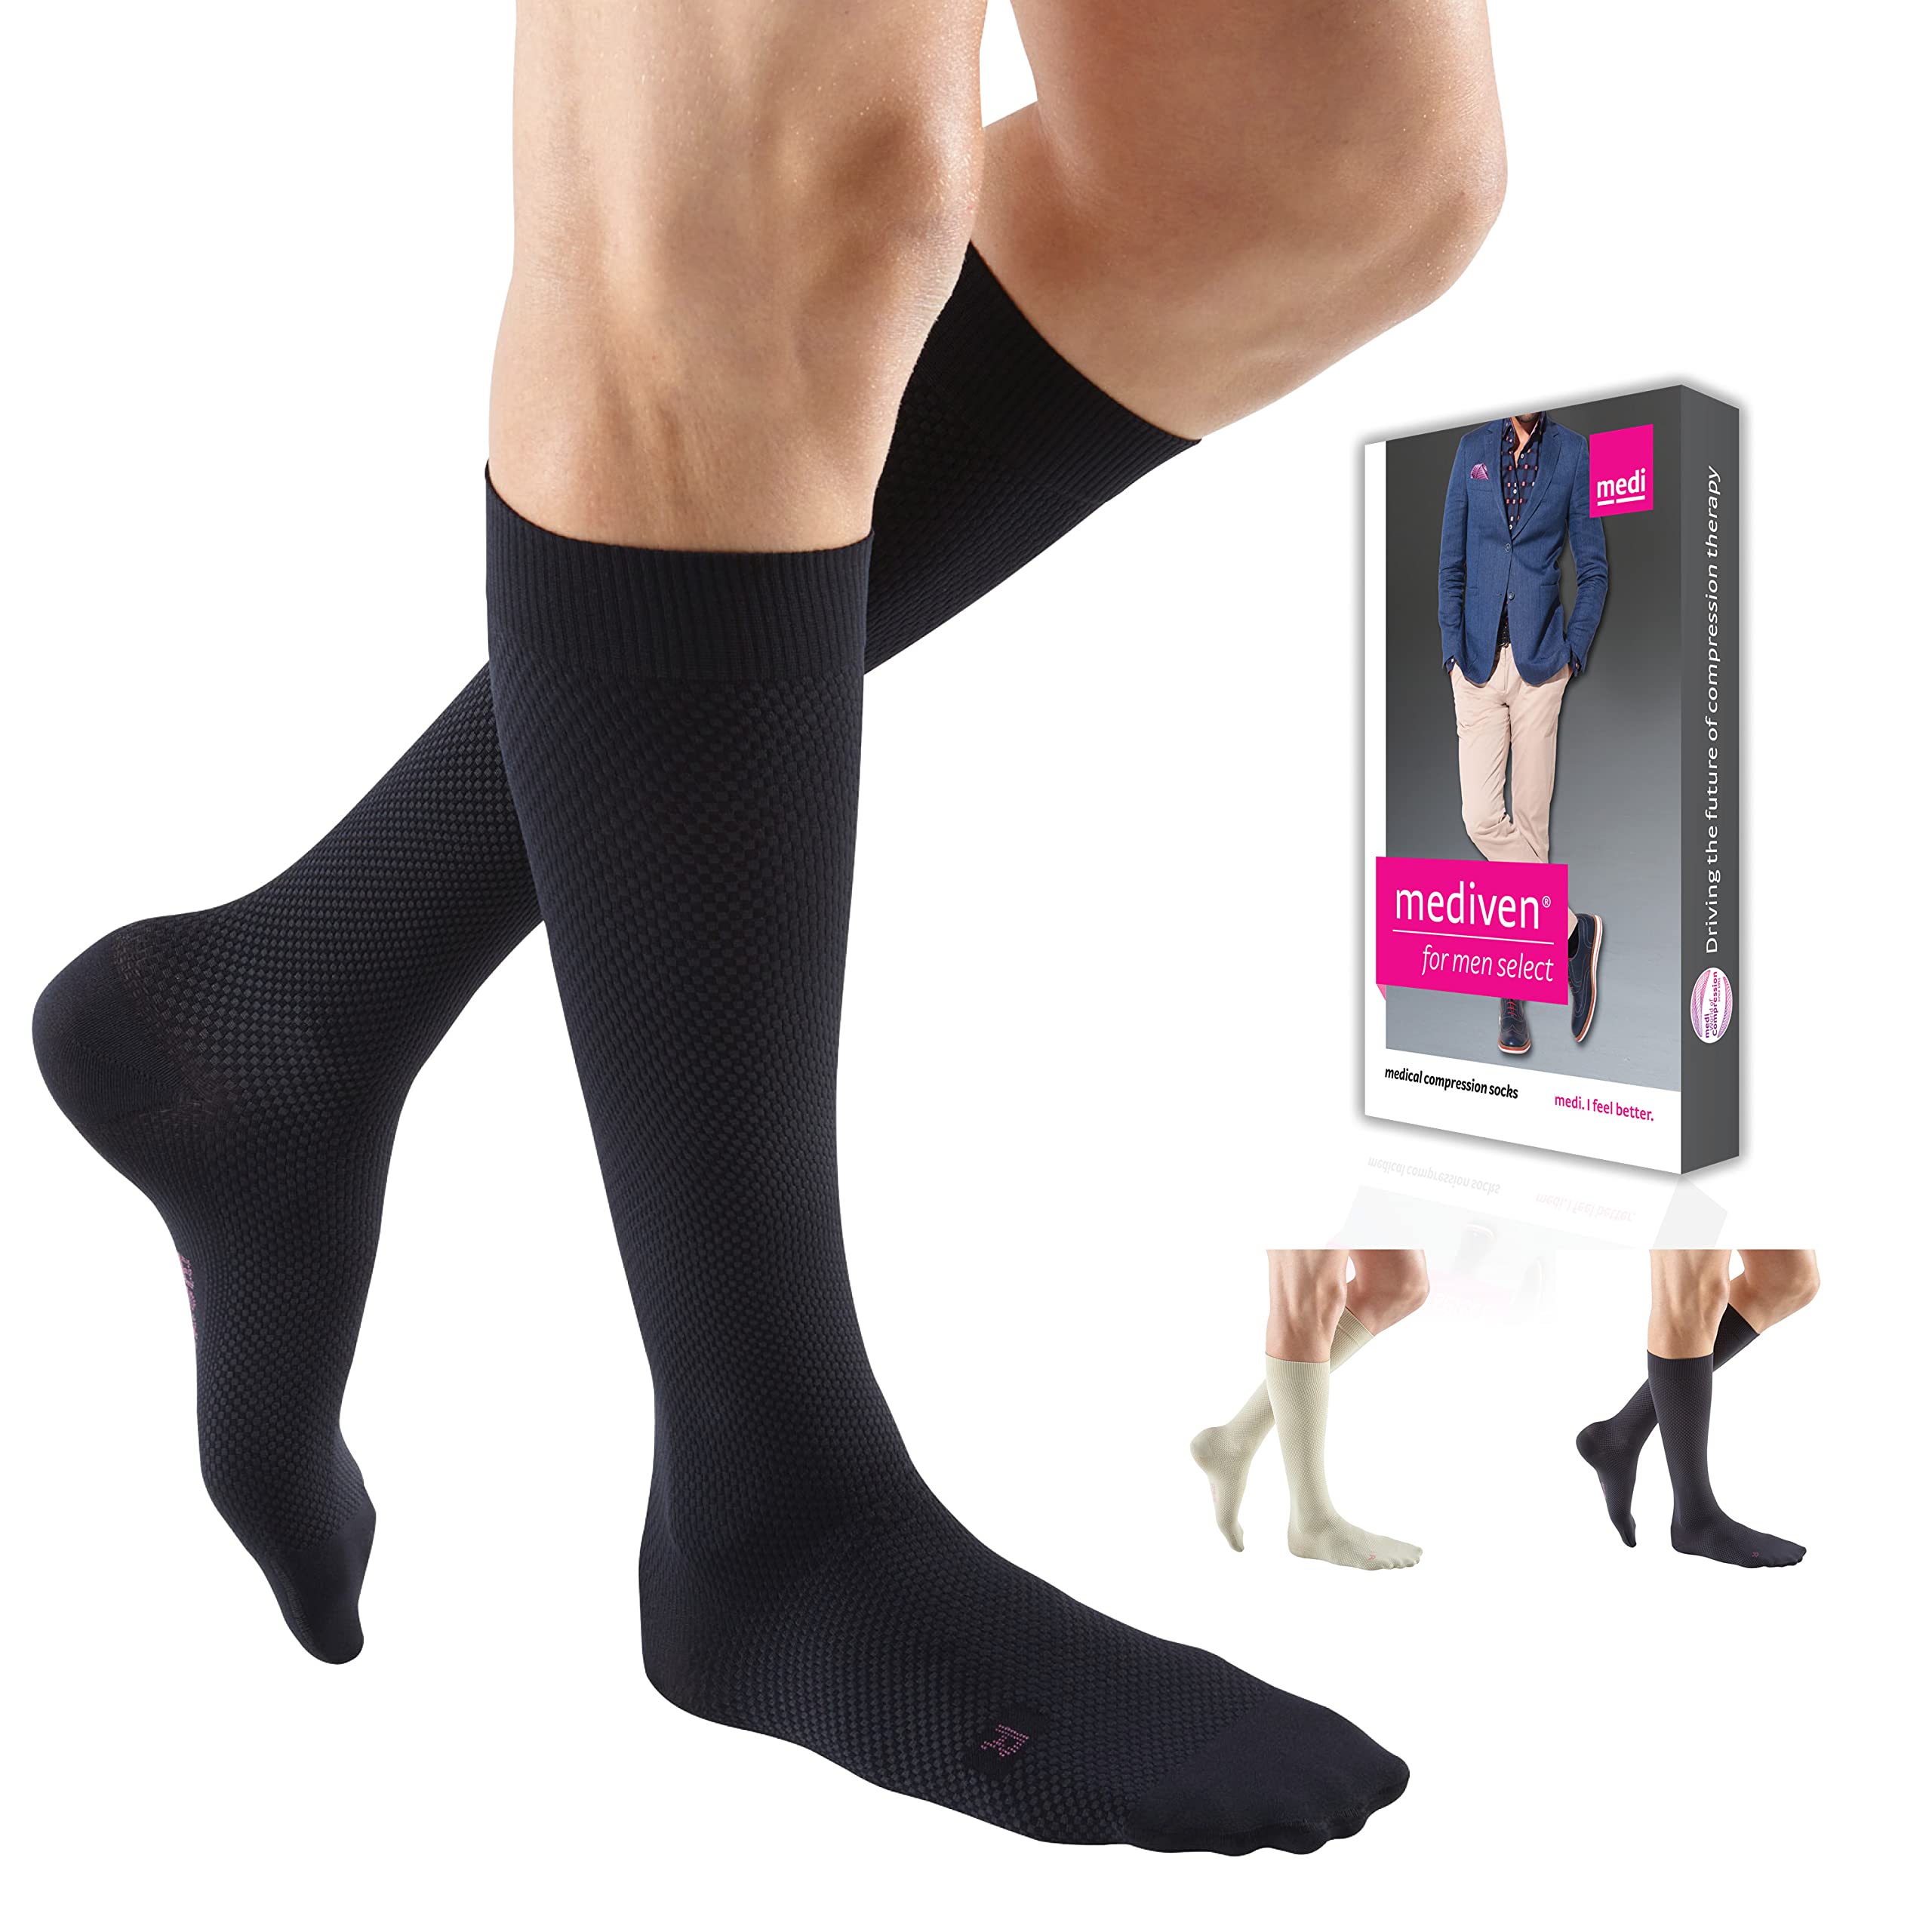 mediven for Men Select, 15-20 mmHg, Calf High Compression Stockings, Closed Toe